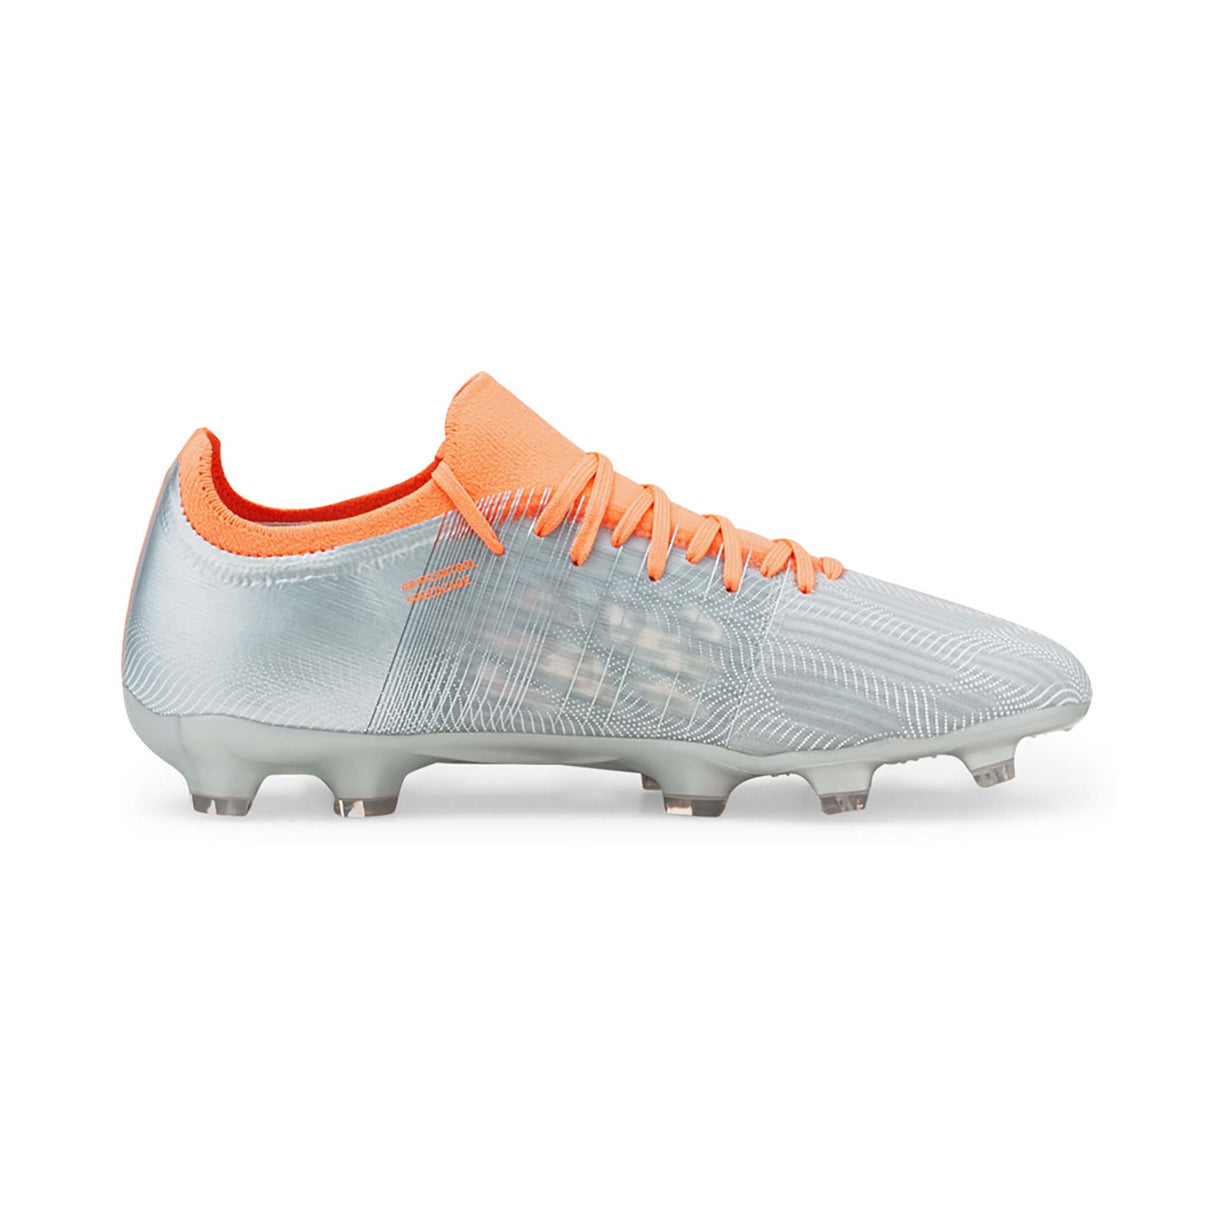 Puma Ultra 3.4 FG/AG chaussures de soccer adulte diamond silver orange lateral